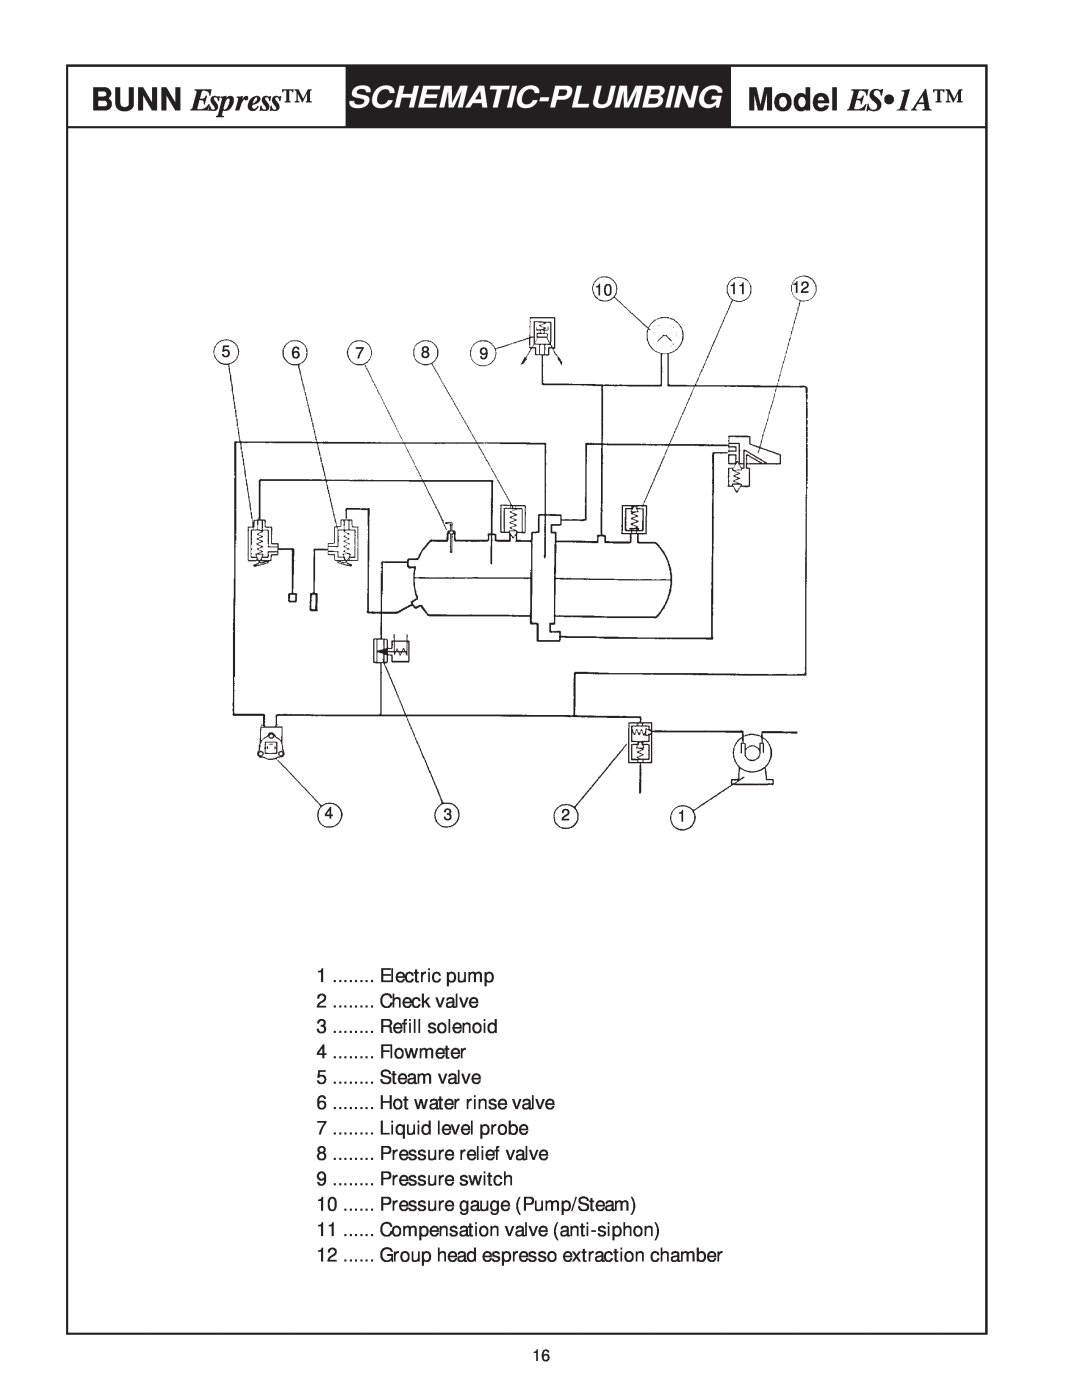 Bunn ES1A service manual BUNN Espress, Model ES•1A, Schematic-Plumbing 